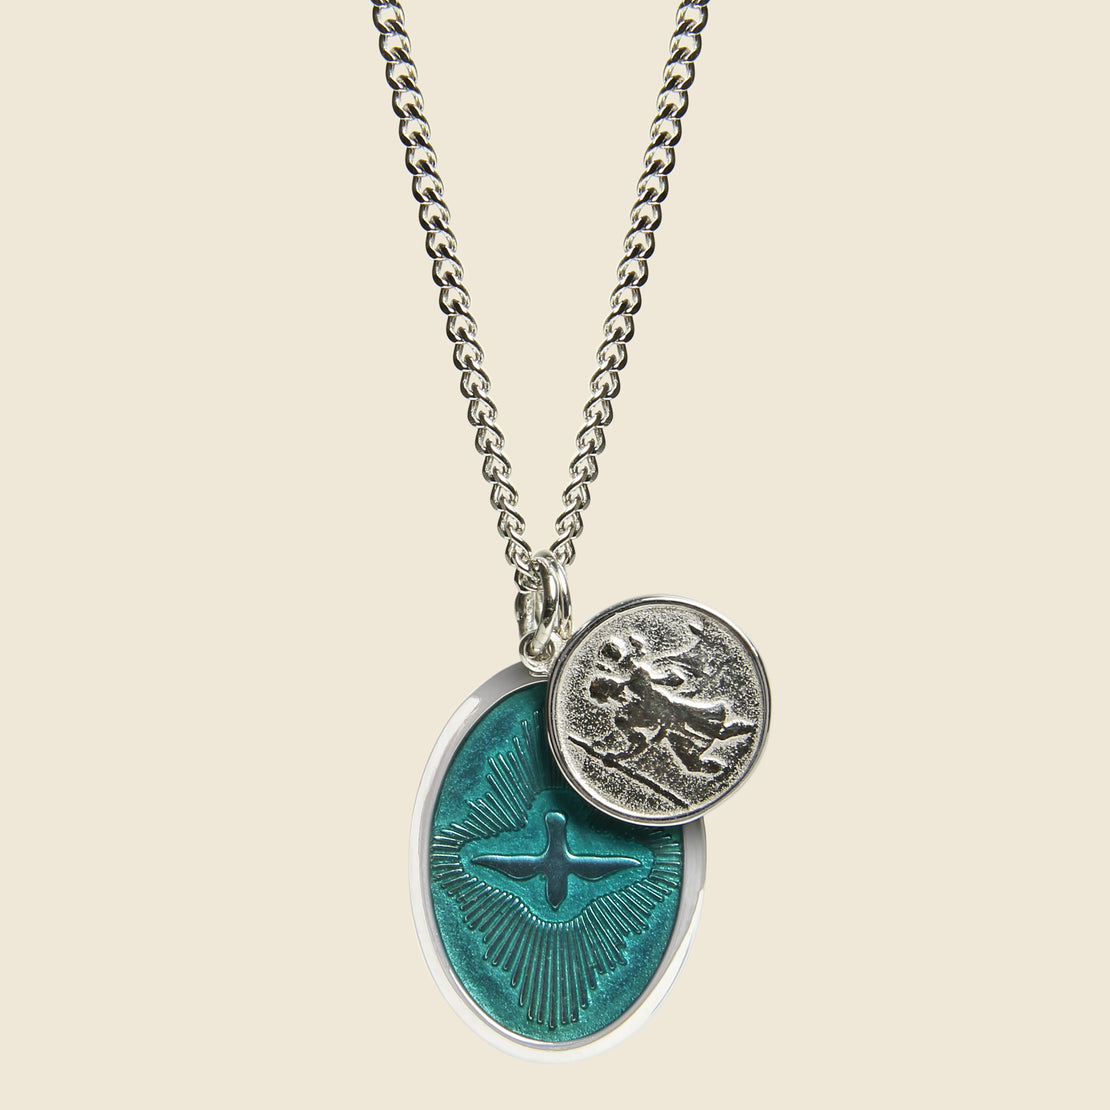 Mini Dove Pendant Necklace - Teal Enamel/Sterling Silver